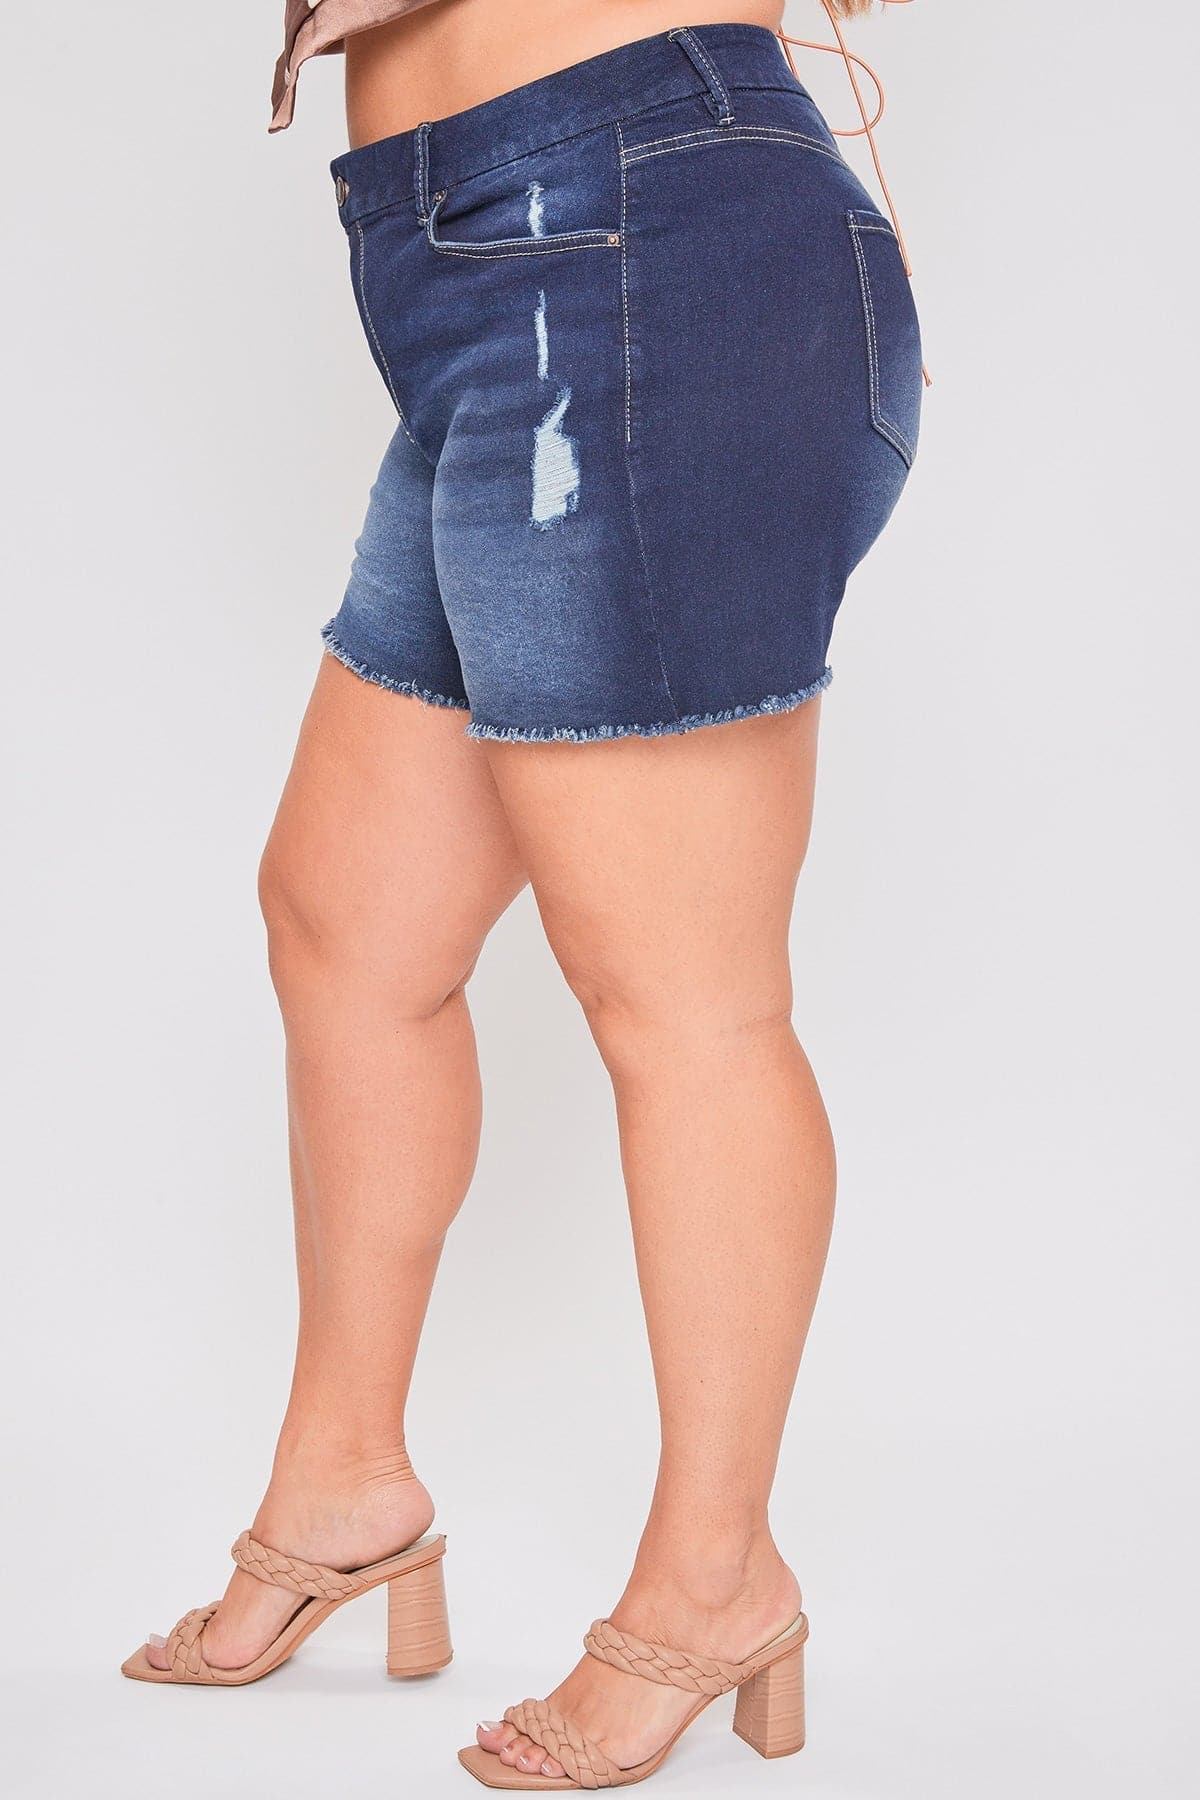 Women's Plus Size Curvy Fit  Jeans Shorts With Fray Hem-Sale